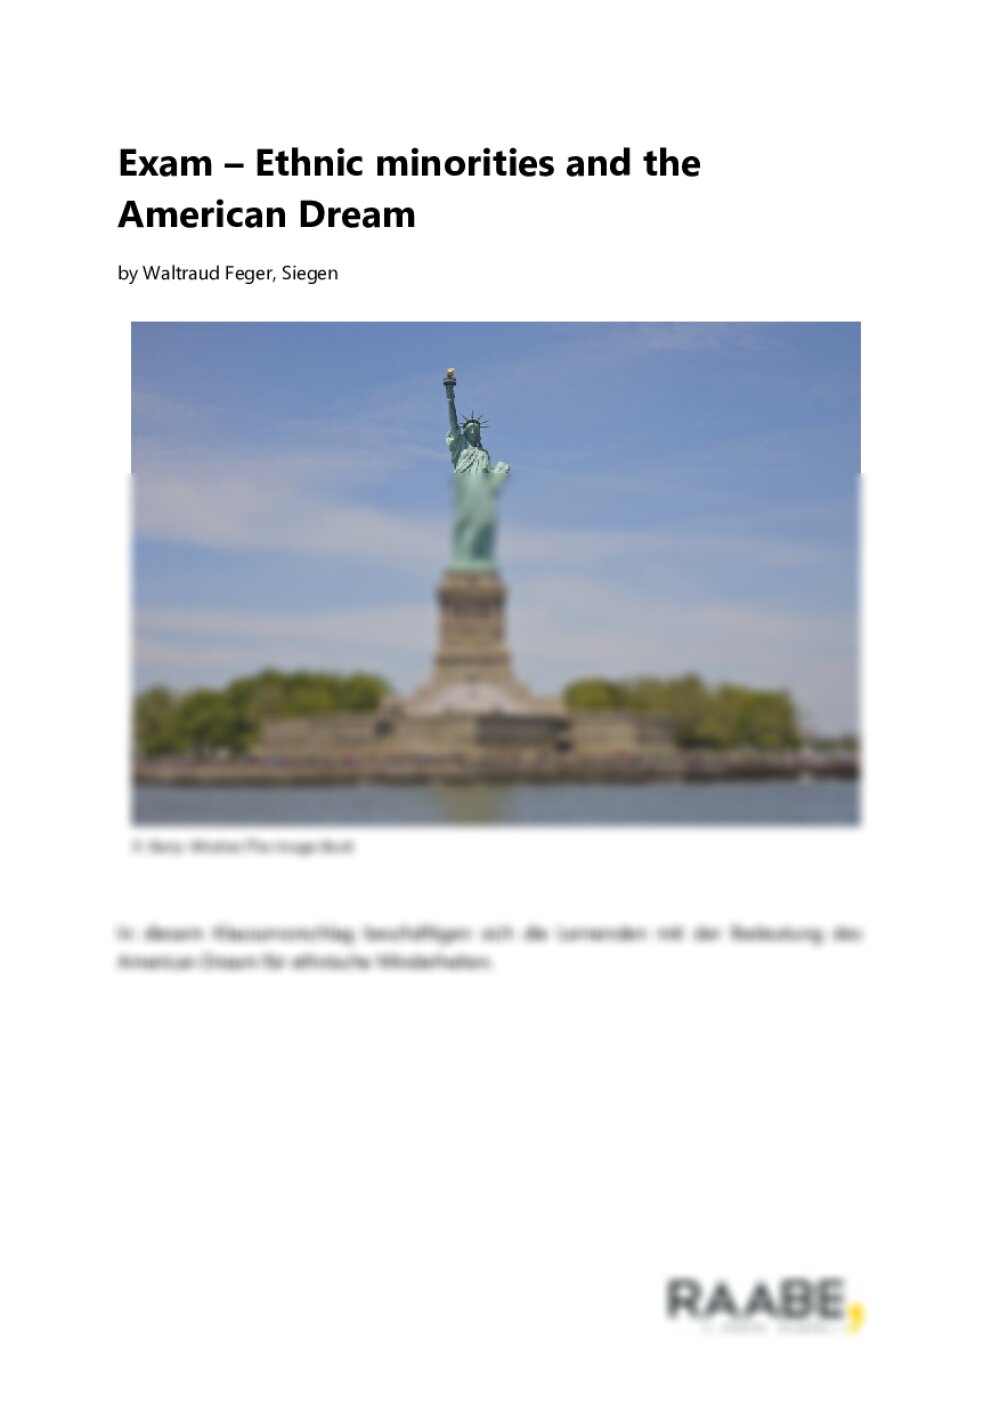 Exam – American Dream - Seite 1